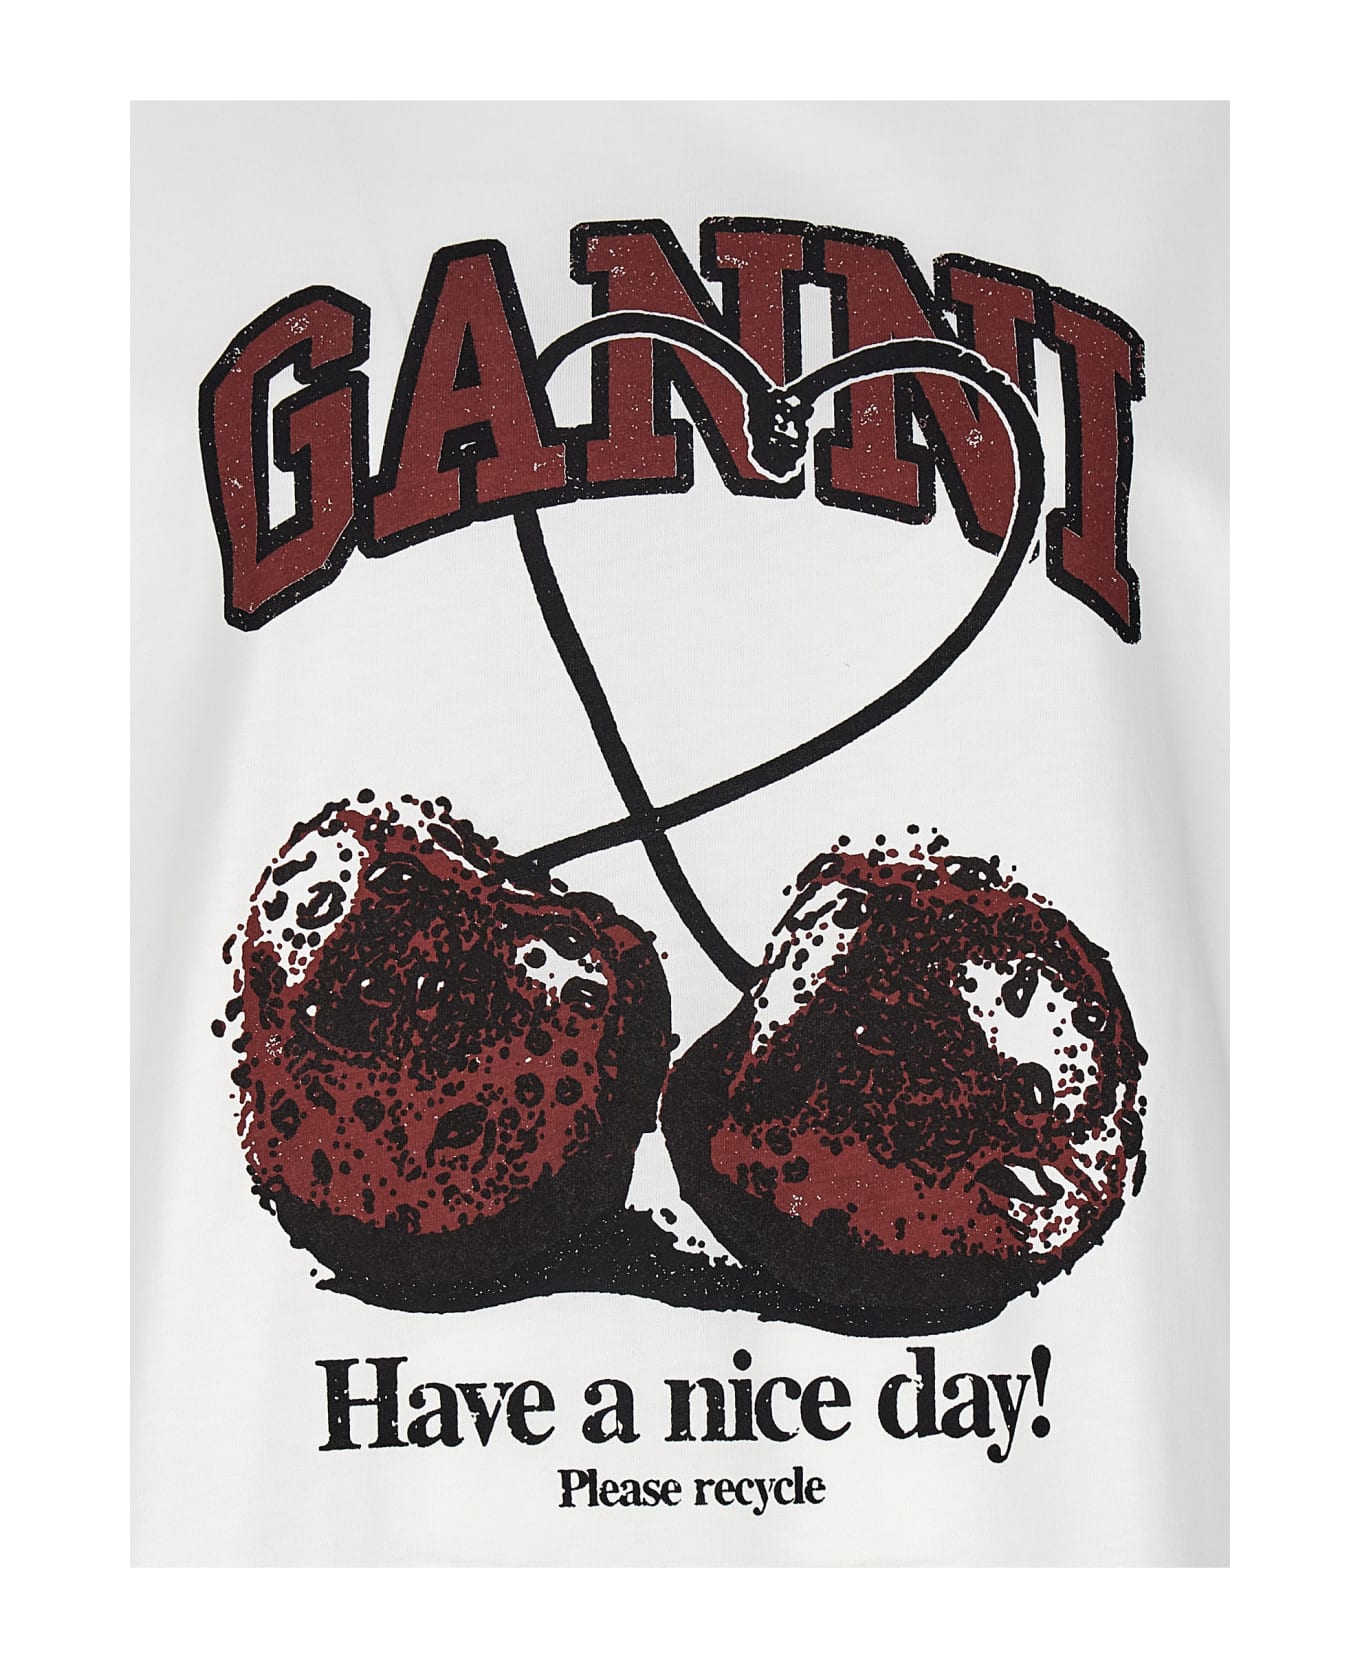 Ganni 'cherry' T-shirt Tシャツ